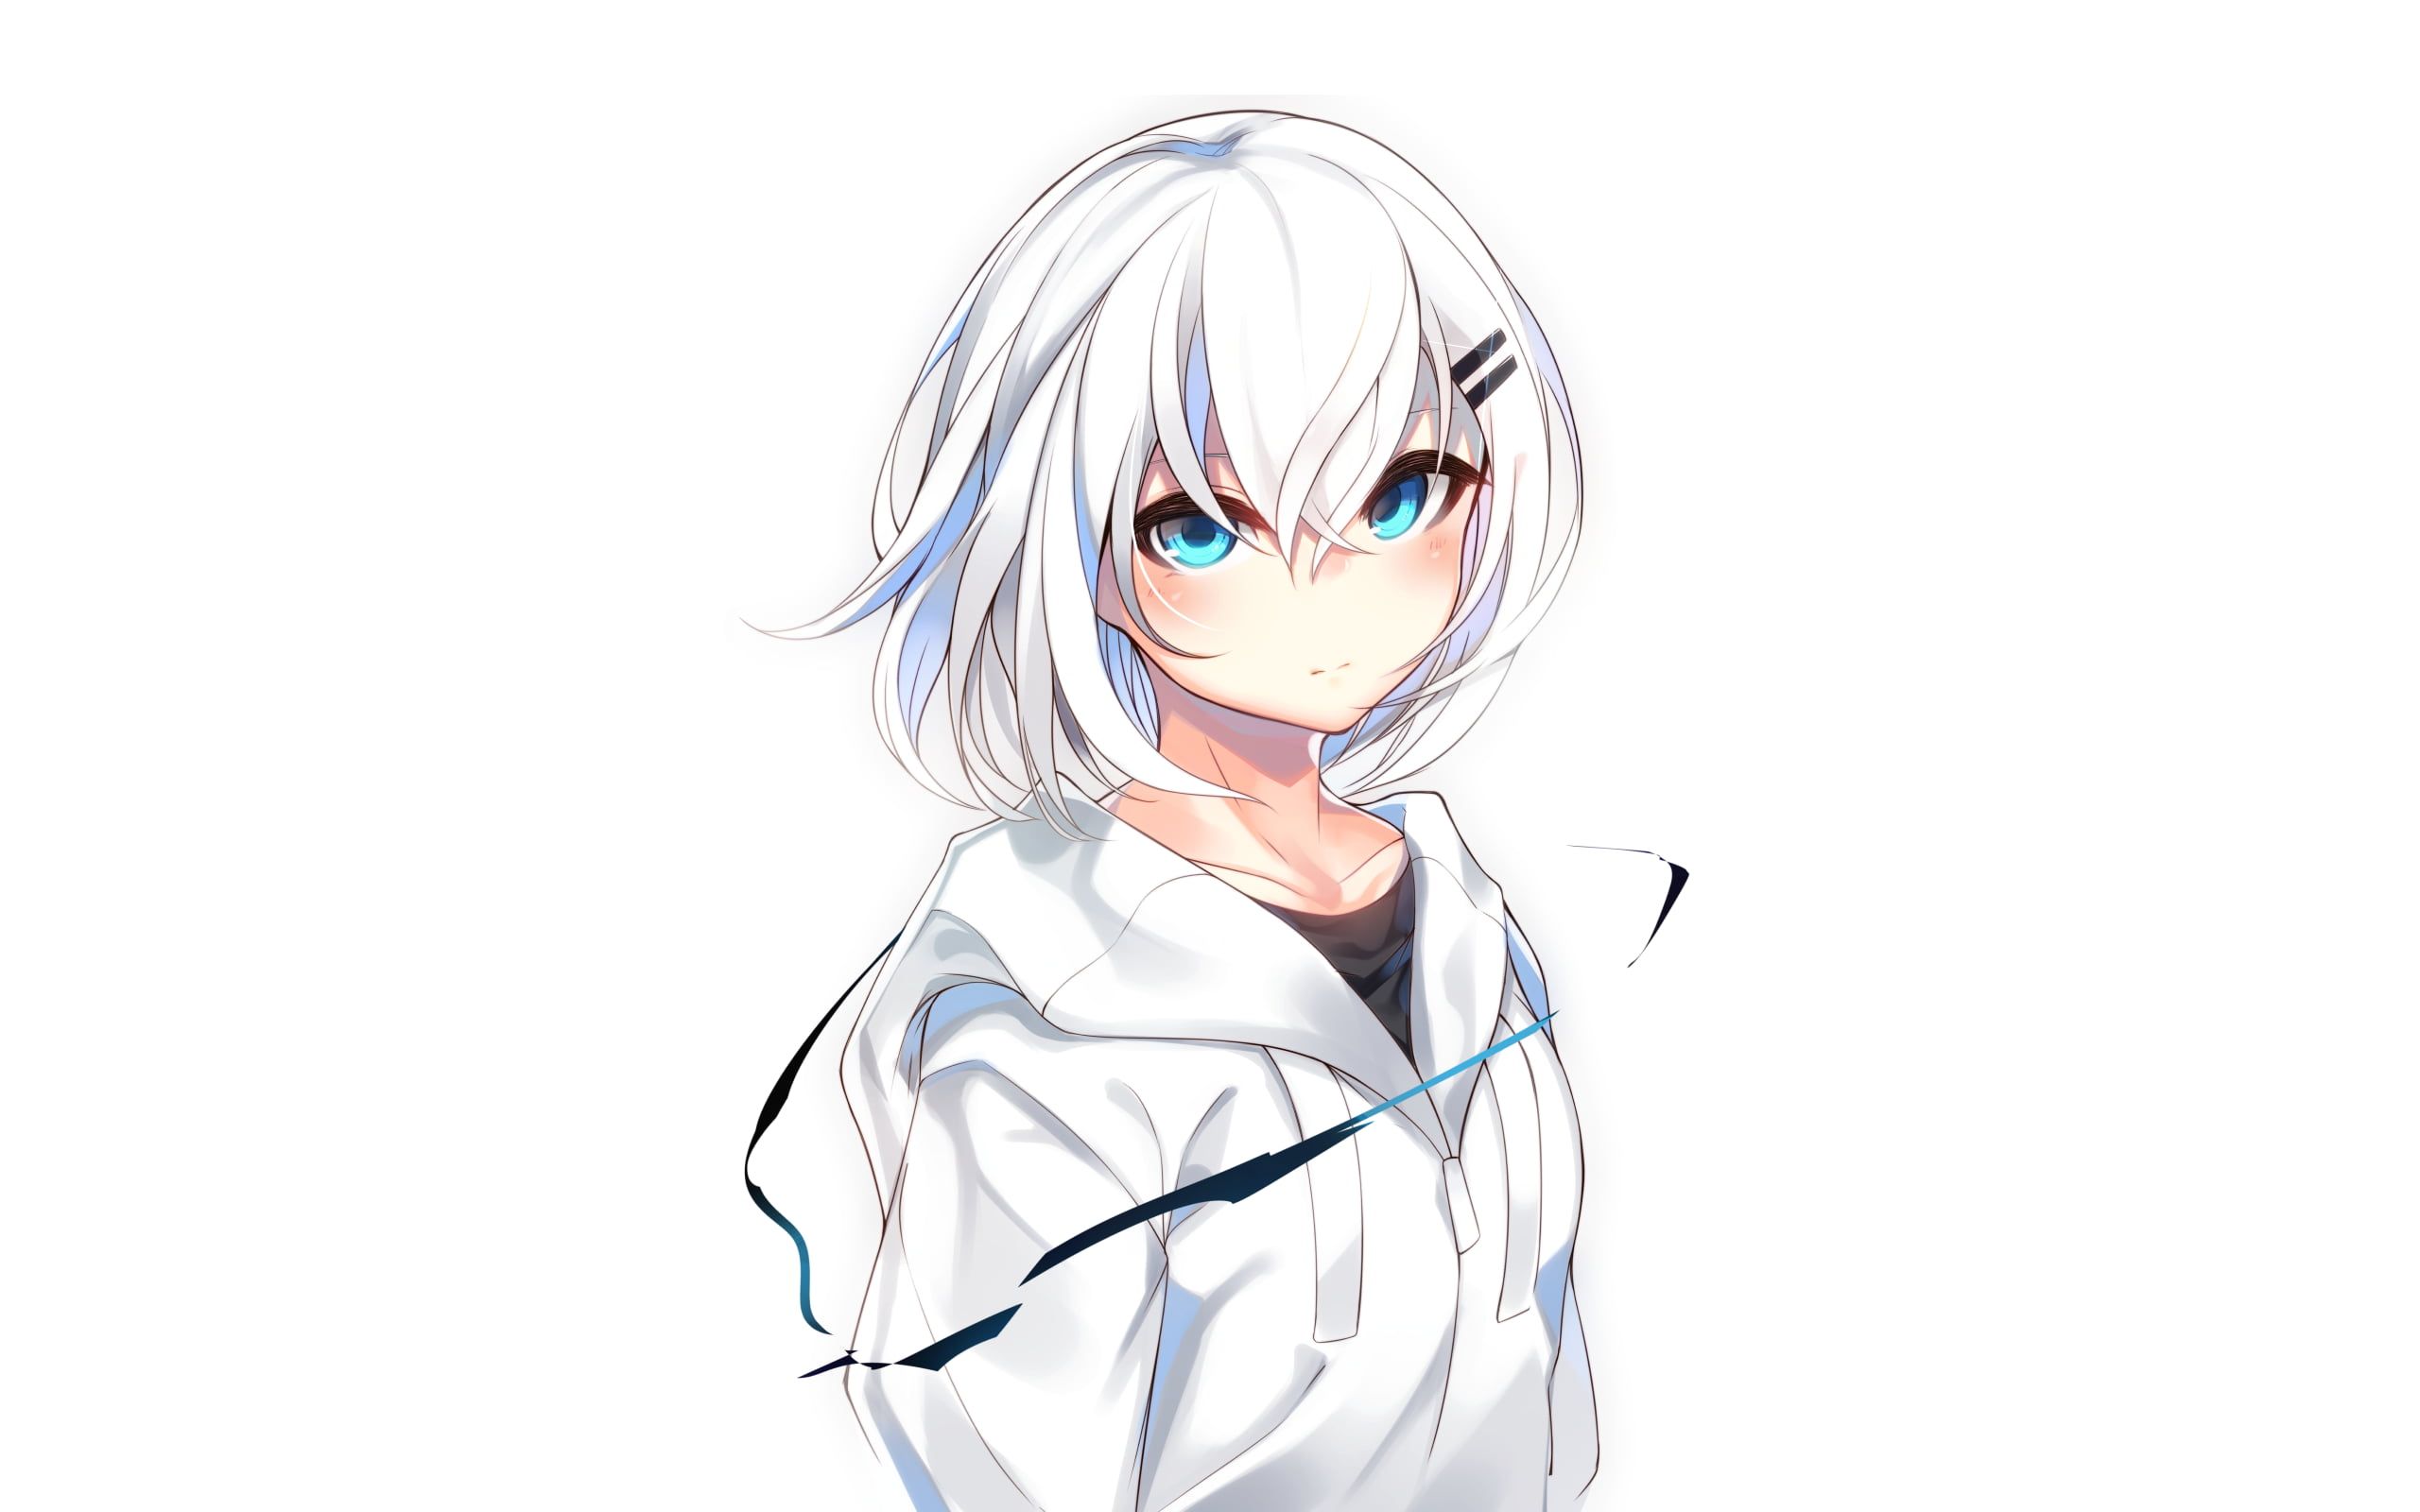 Short white haired female anime character illustration, aqua eyes